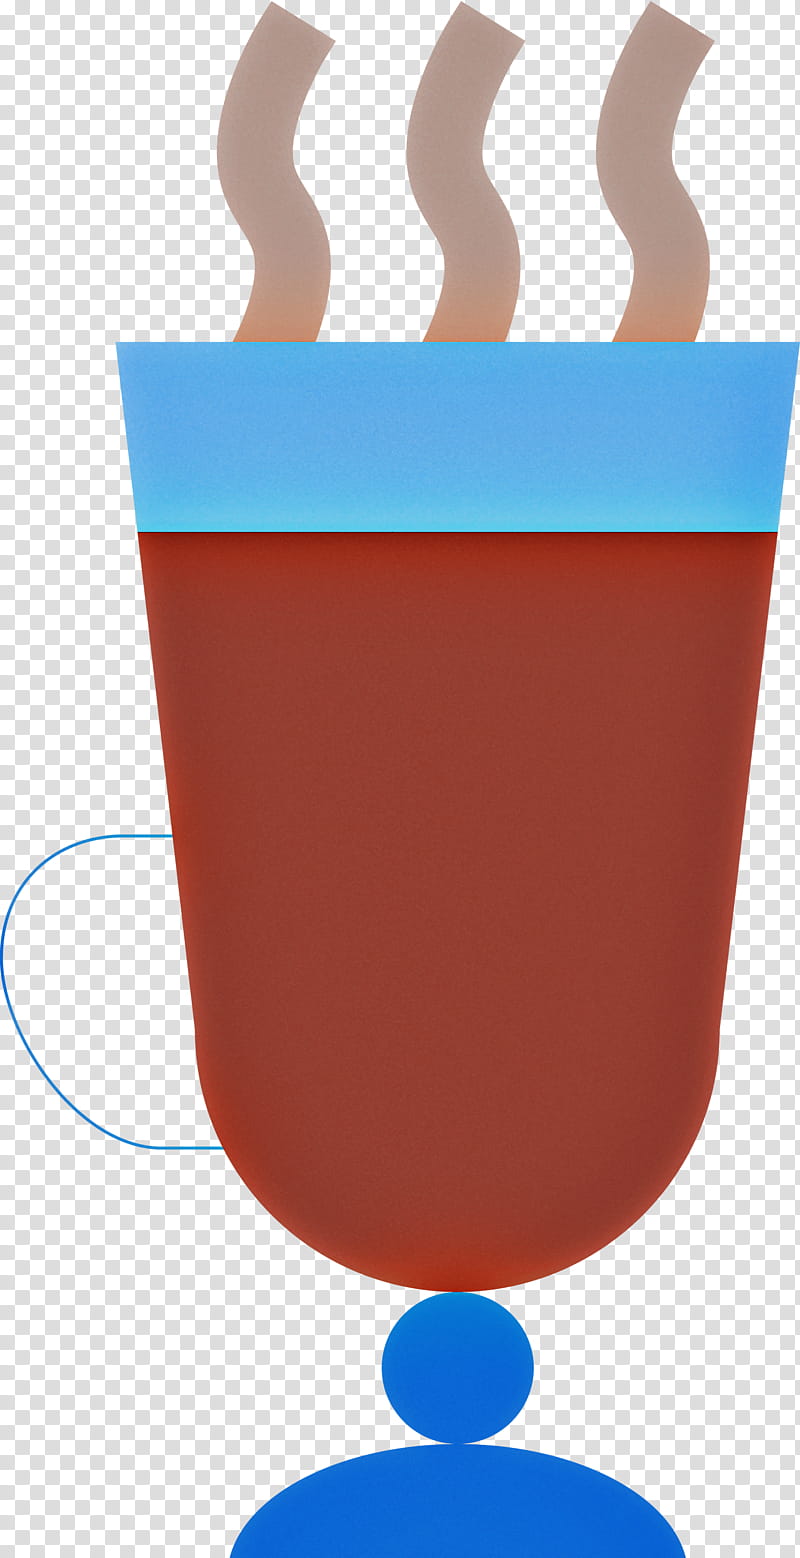 Hot Chocolate, Orange, Cup, Slush, Drink, Plastic, Drinkware, Nonalcoholic Beverage transparent background PNG clipart